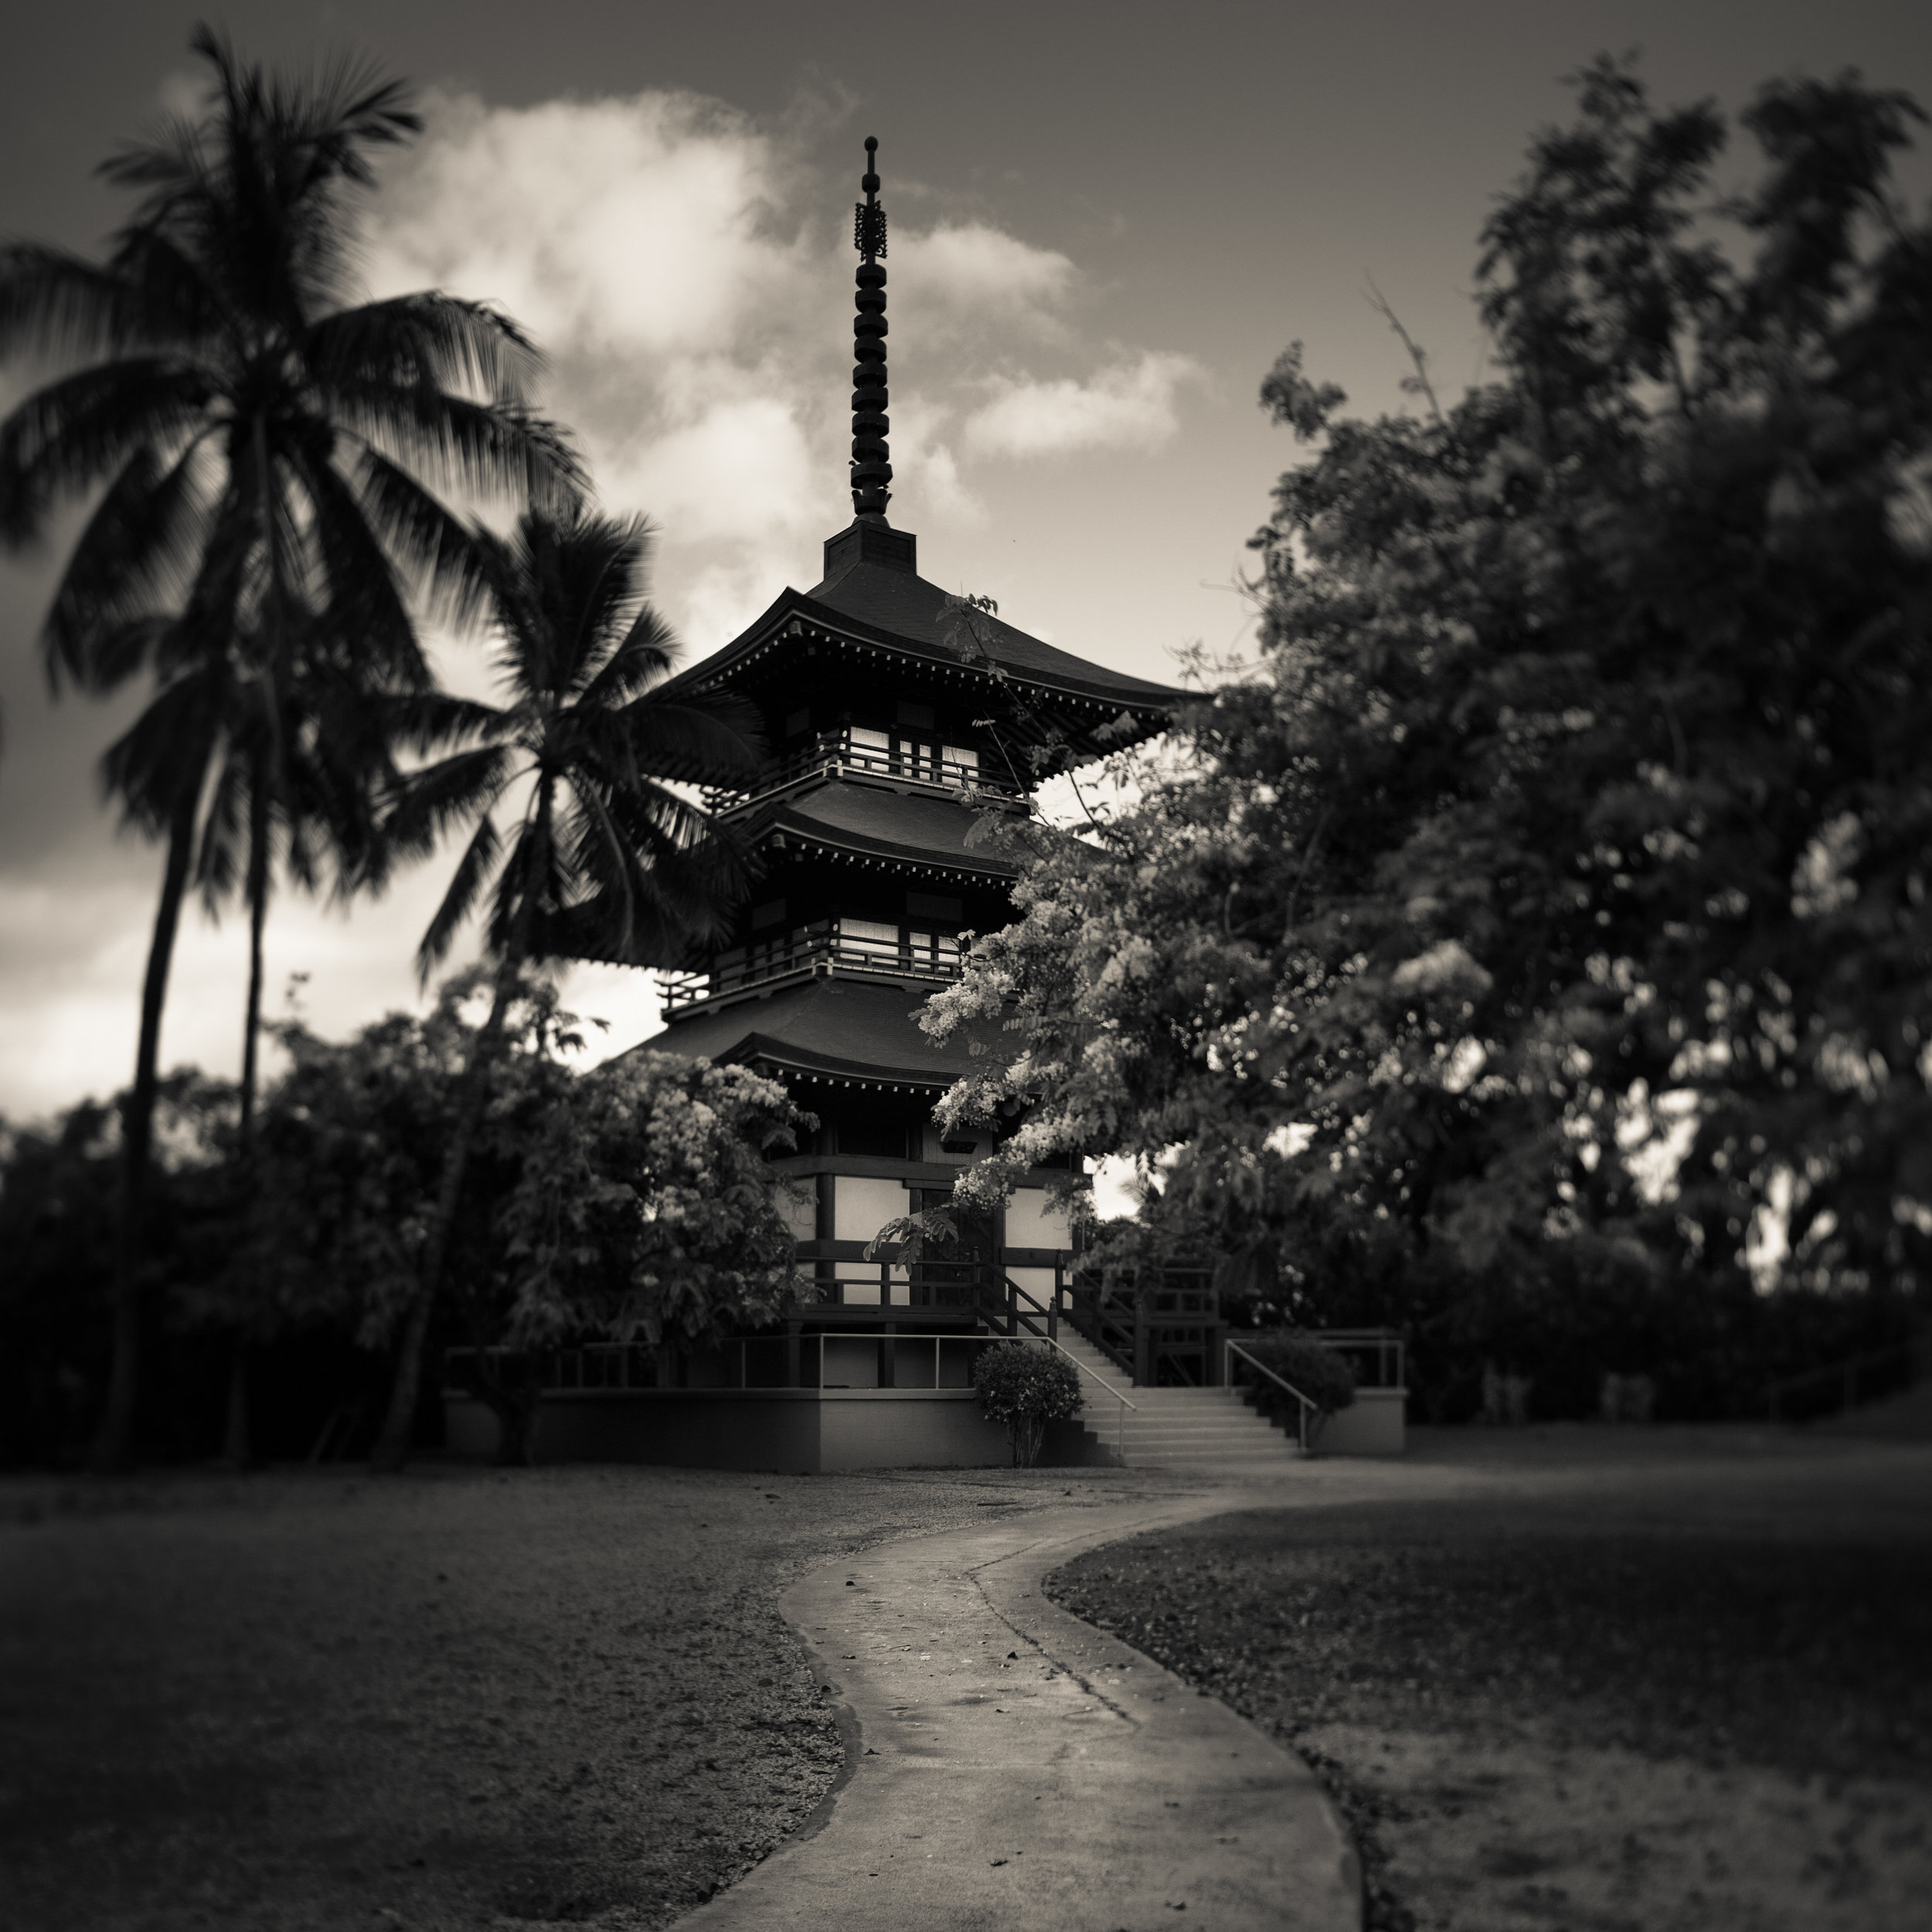 Maui Lahaina Jodo temple black white buddhist pagoda japanese